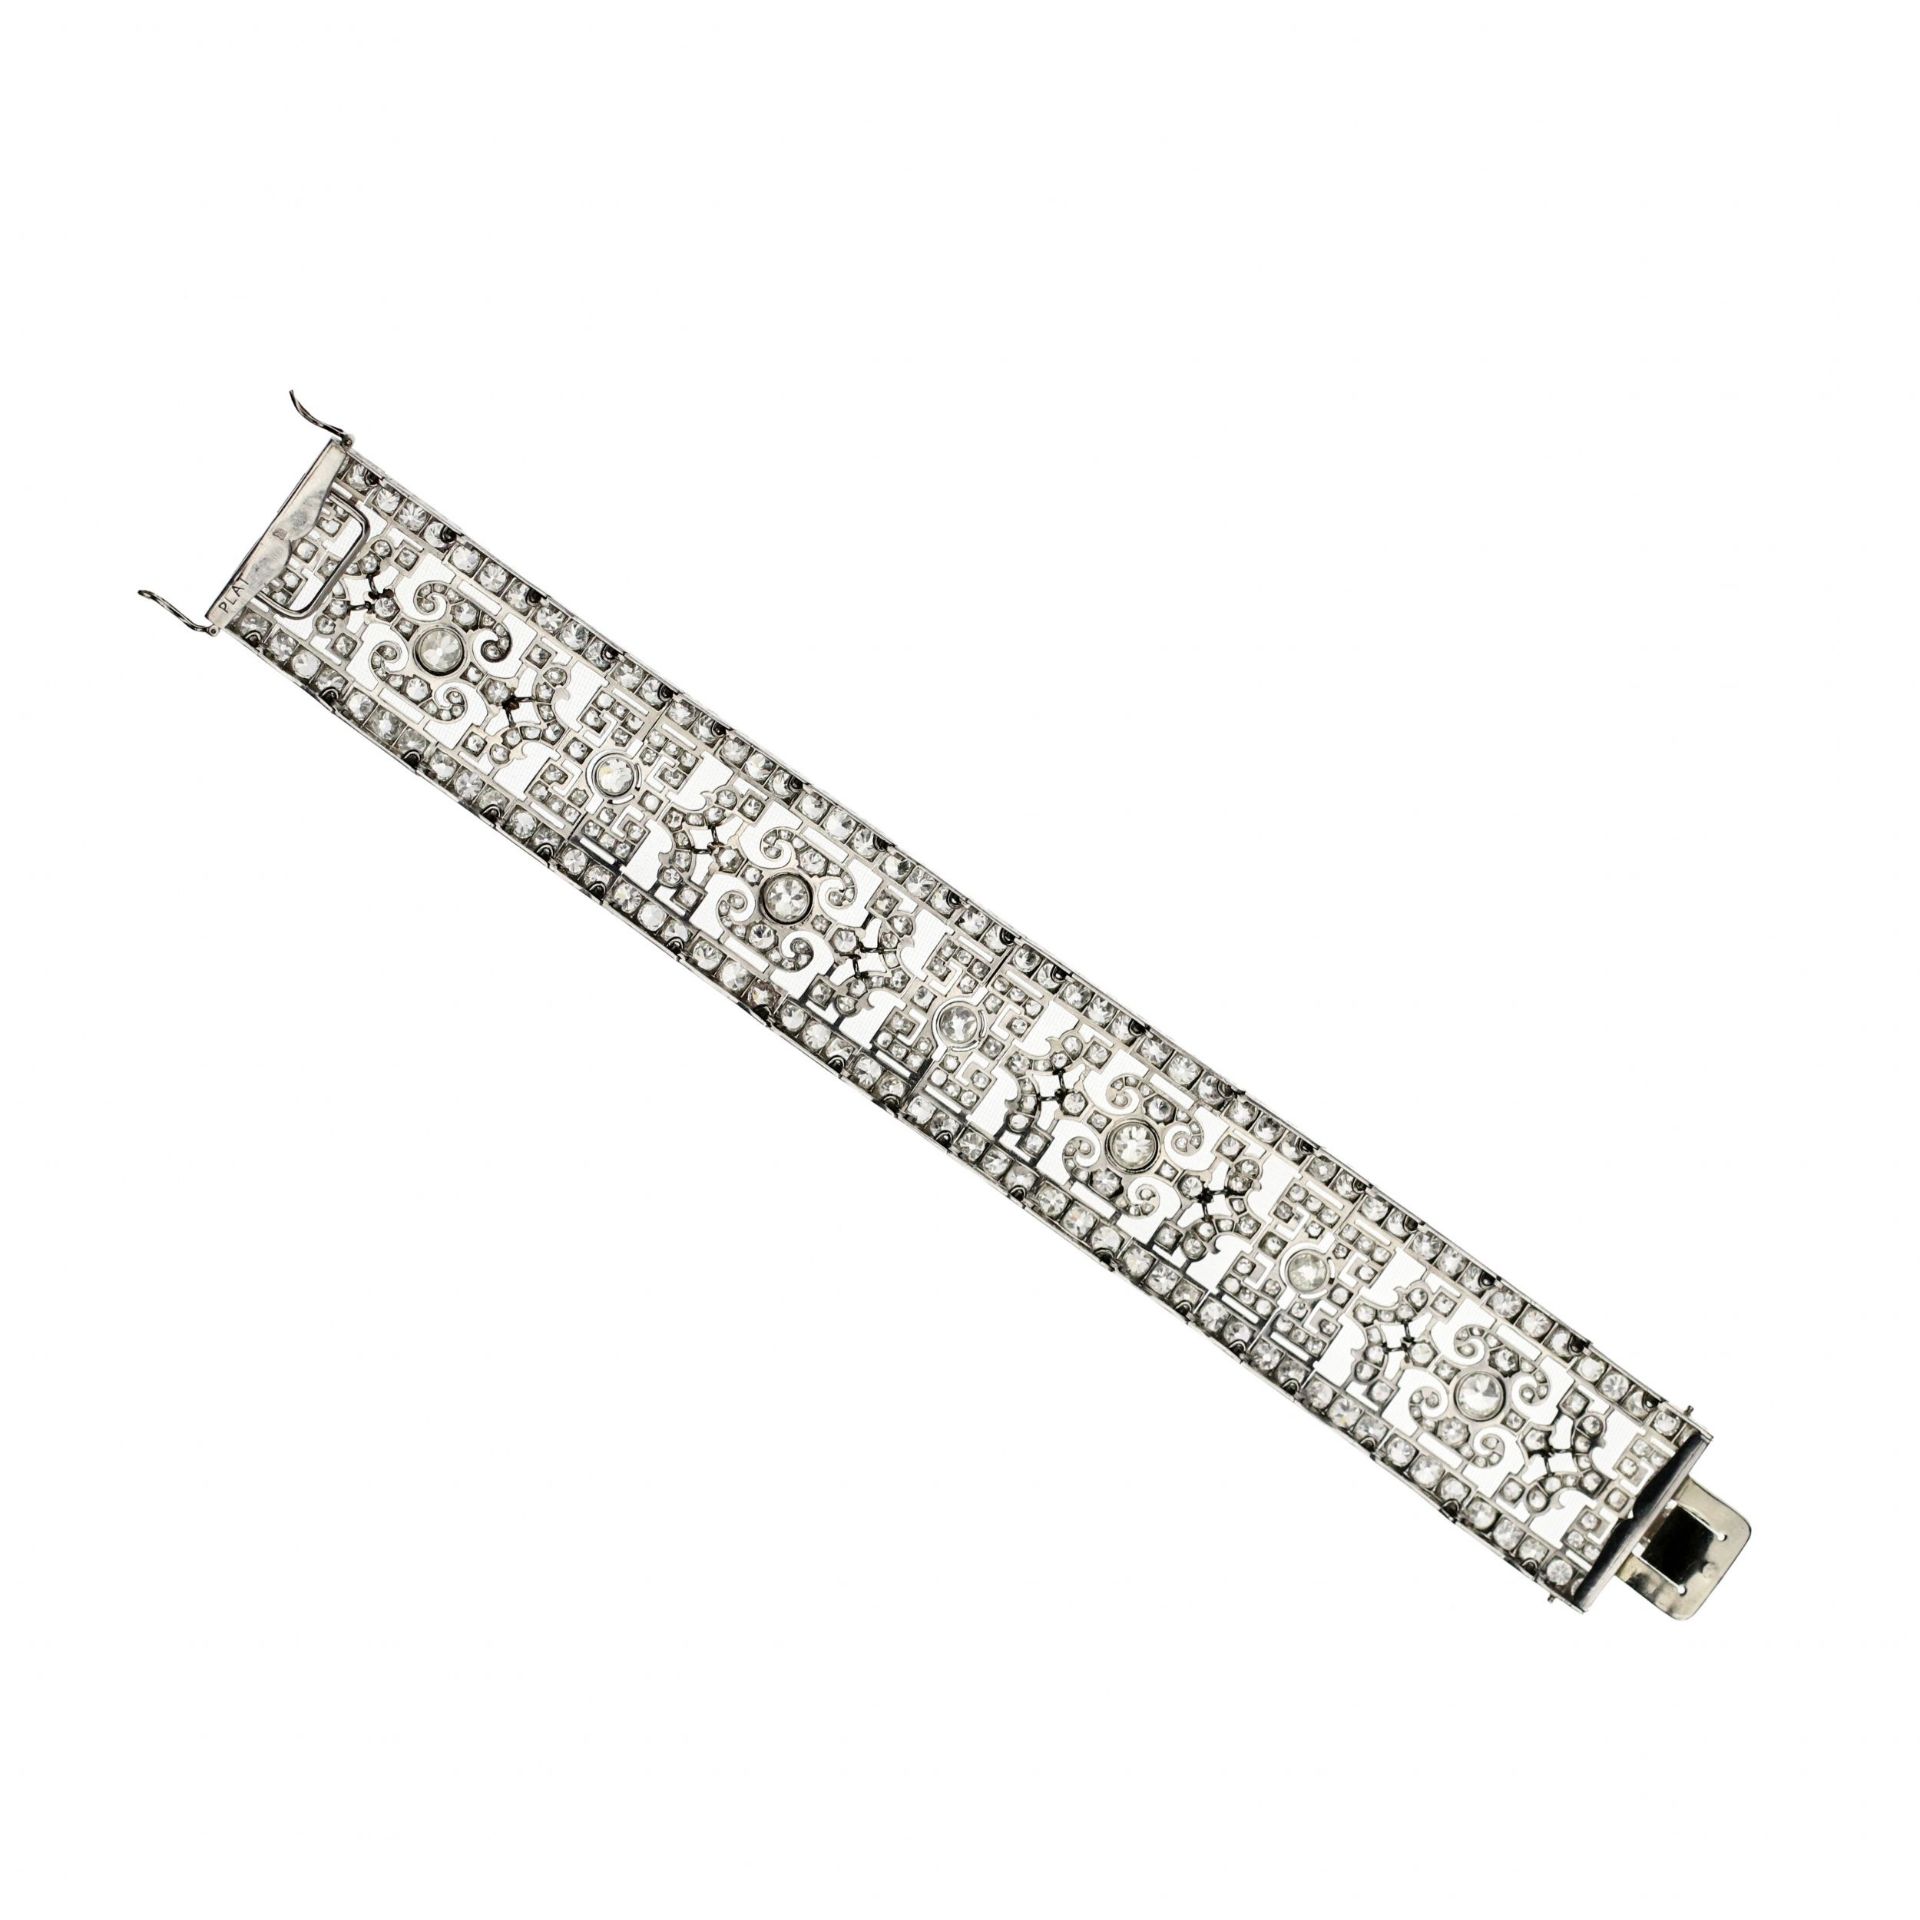 Platinum bracelet with diamonds, NARDI, Italy. In original case. - Image 7 of 9